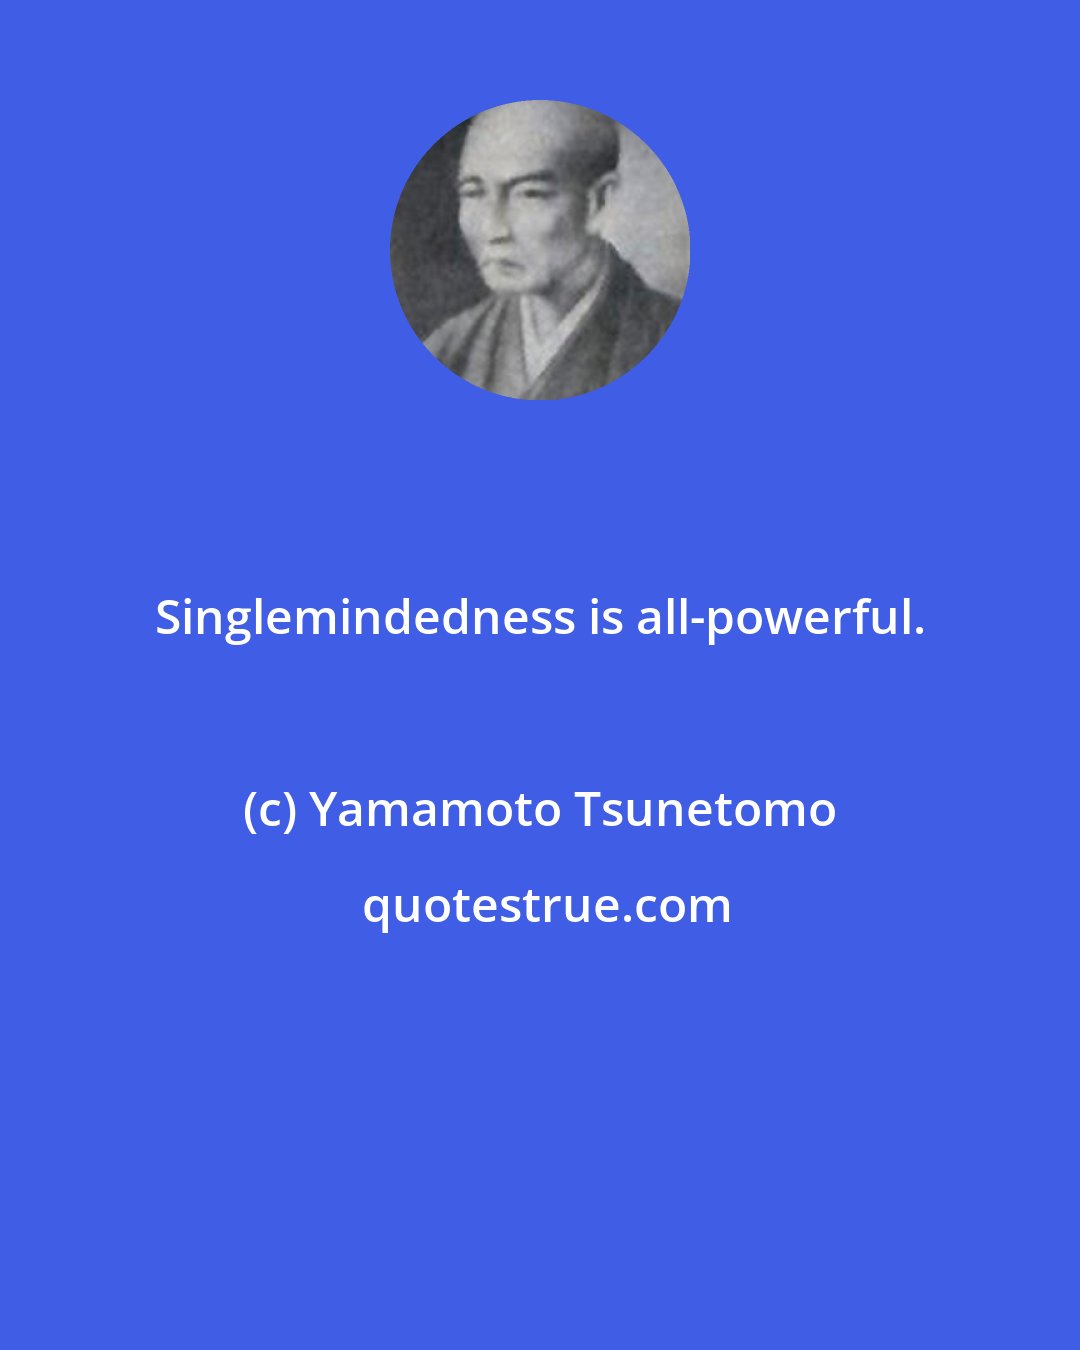 Yamamoto Tsunetomo: Singlemindedness is all-powerful.